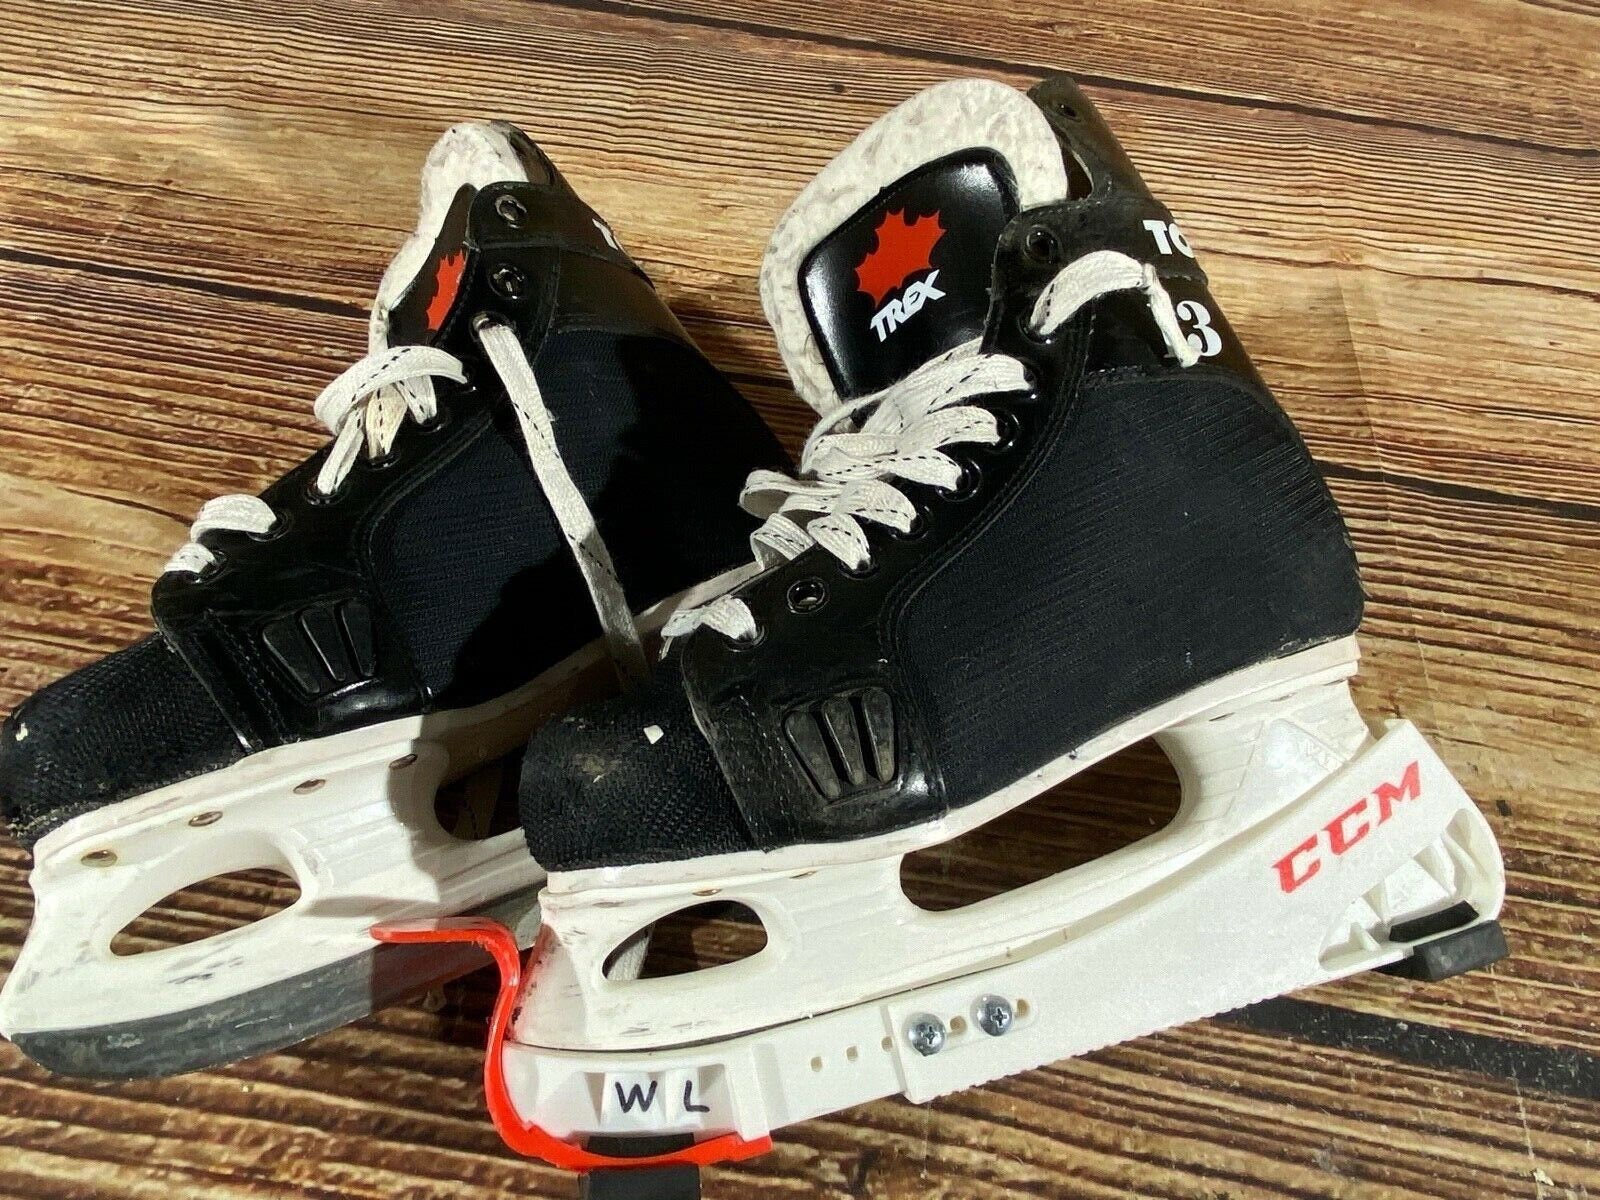 TREX Ice Skates for Ice Hockey Winter Skating Unisex Size EU